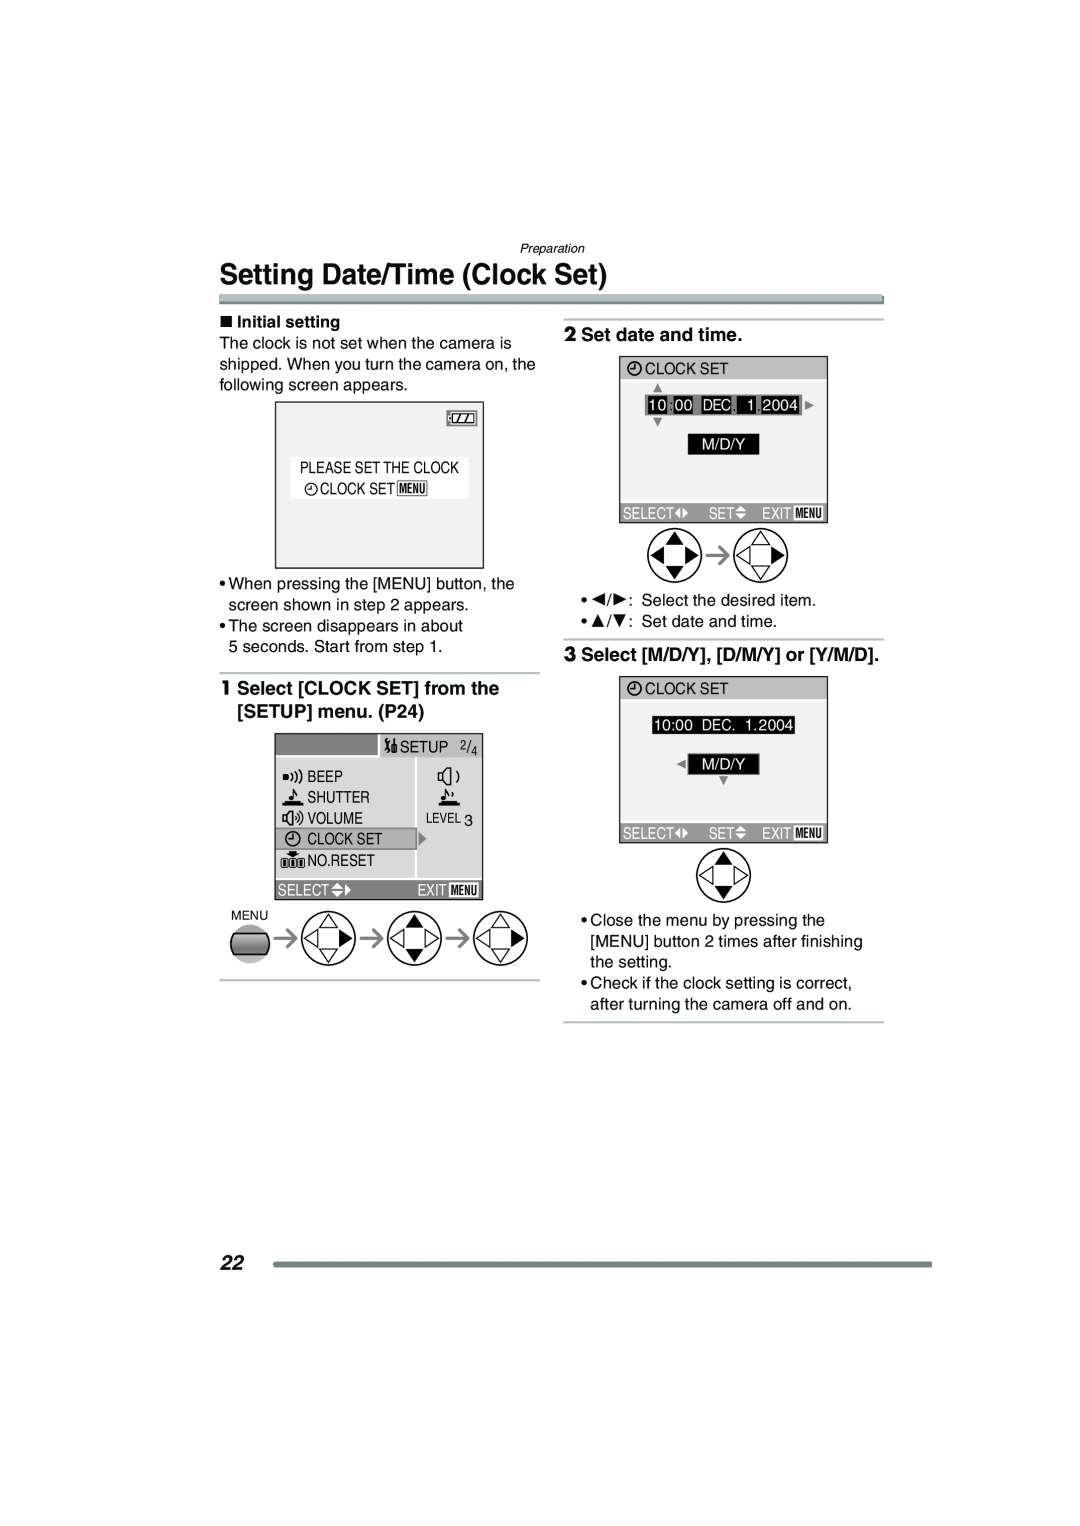 Panasonic DMC-FZ20PP Setting Date/Time Clock Set, Select CLOCK SET from the, SETUP menu. P24, Set date and time 